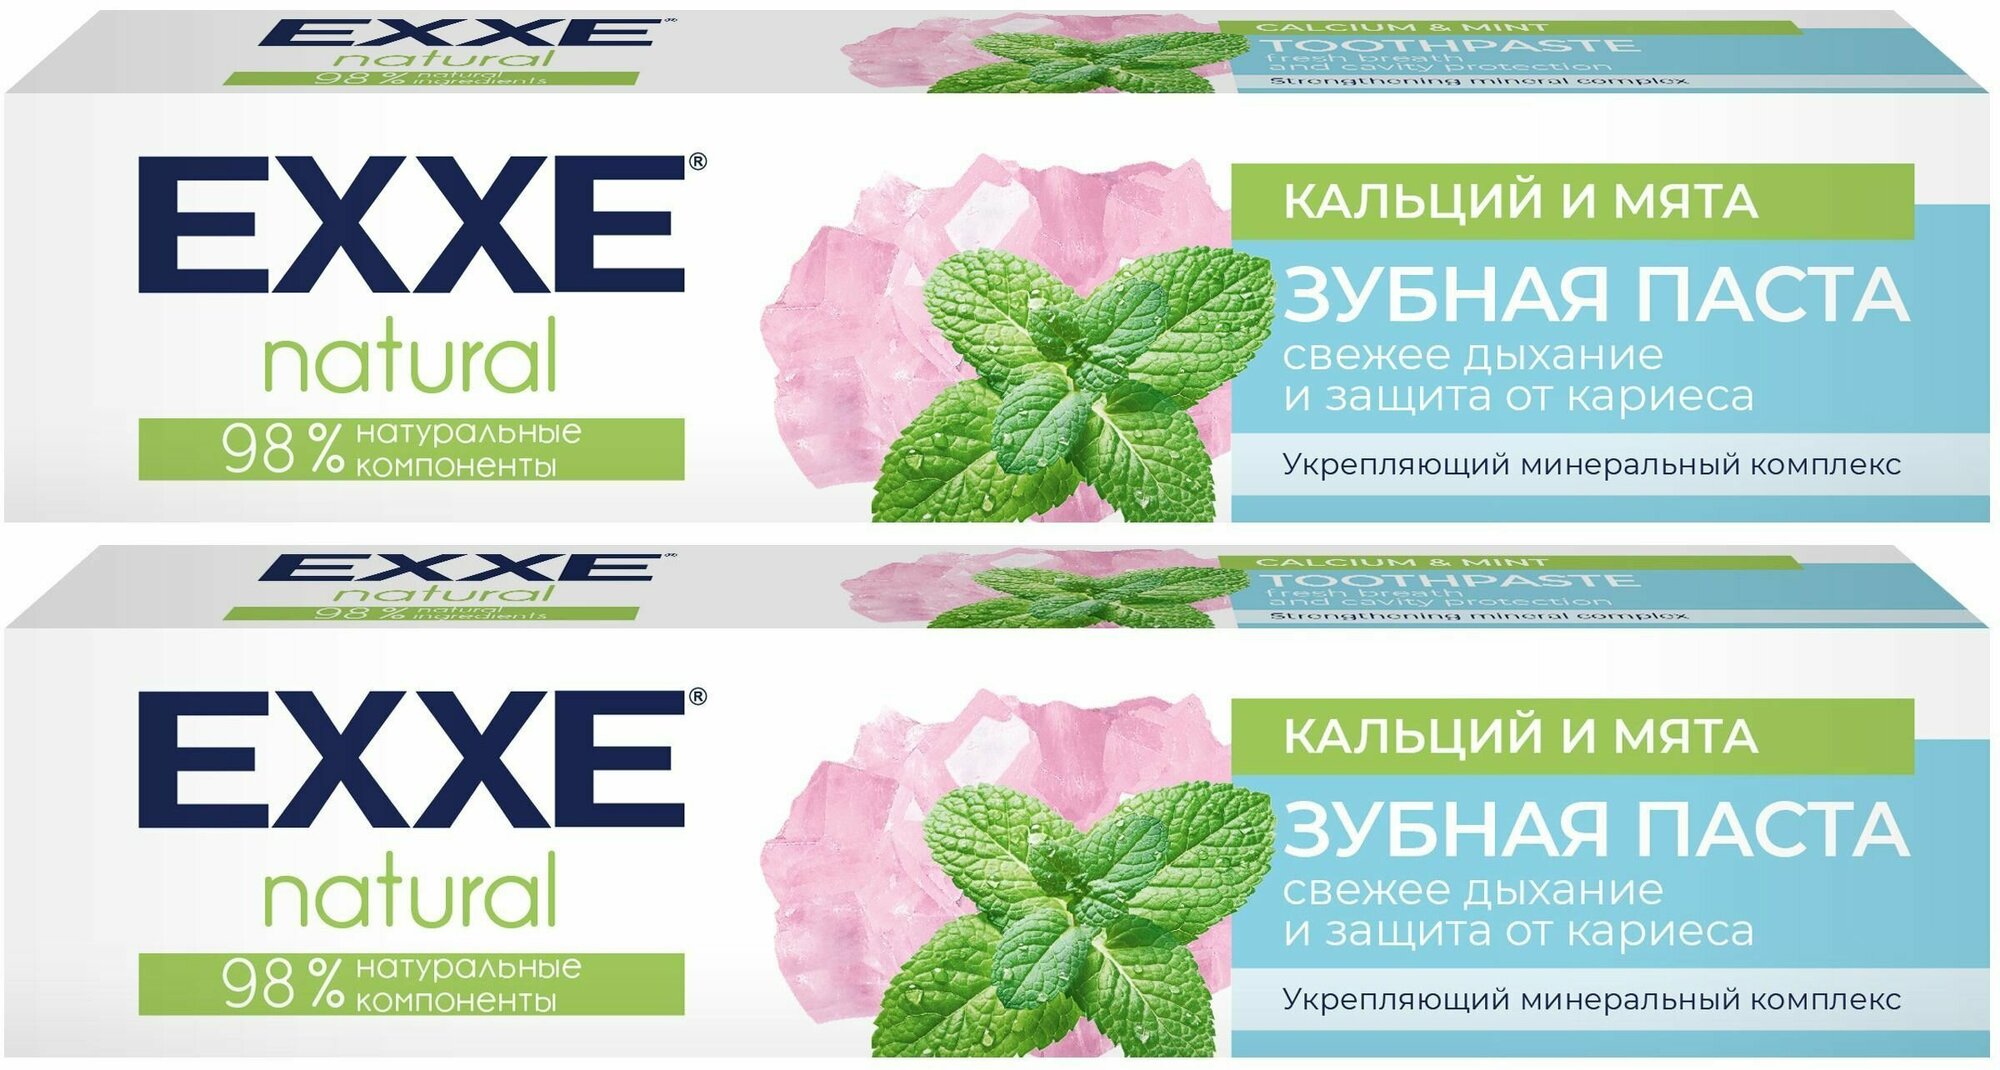 EXXE Зубная паста natural, Кальций и мята, 75 мл, 2 шт